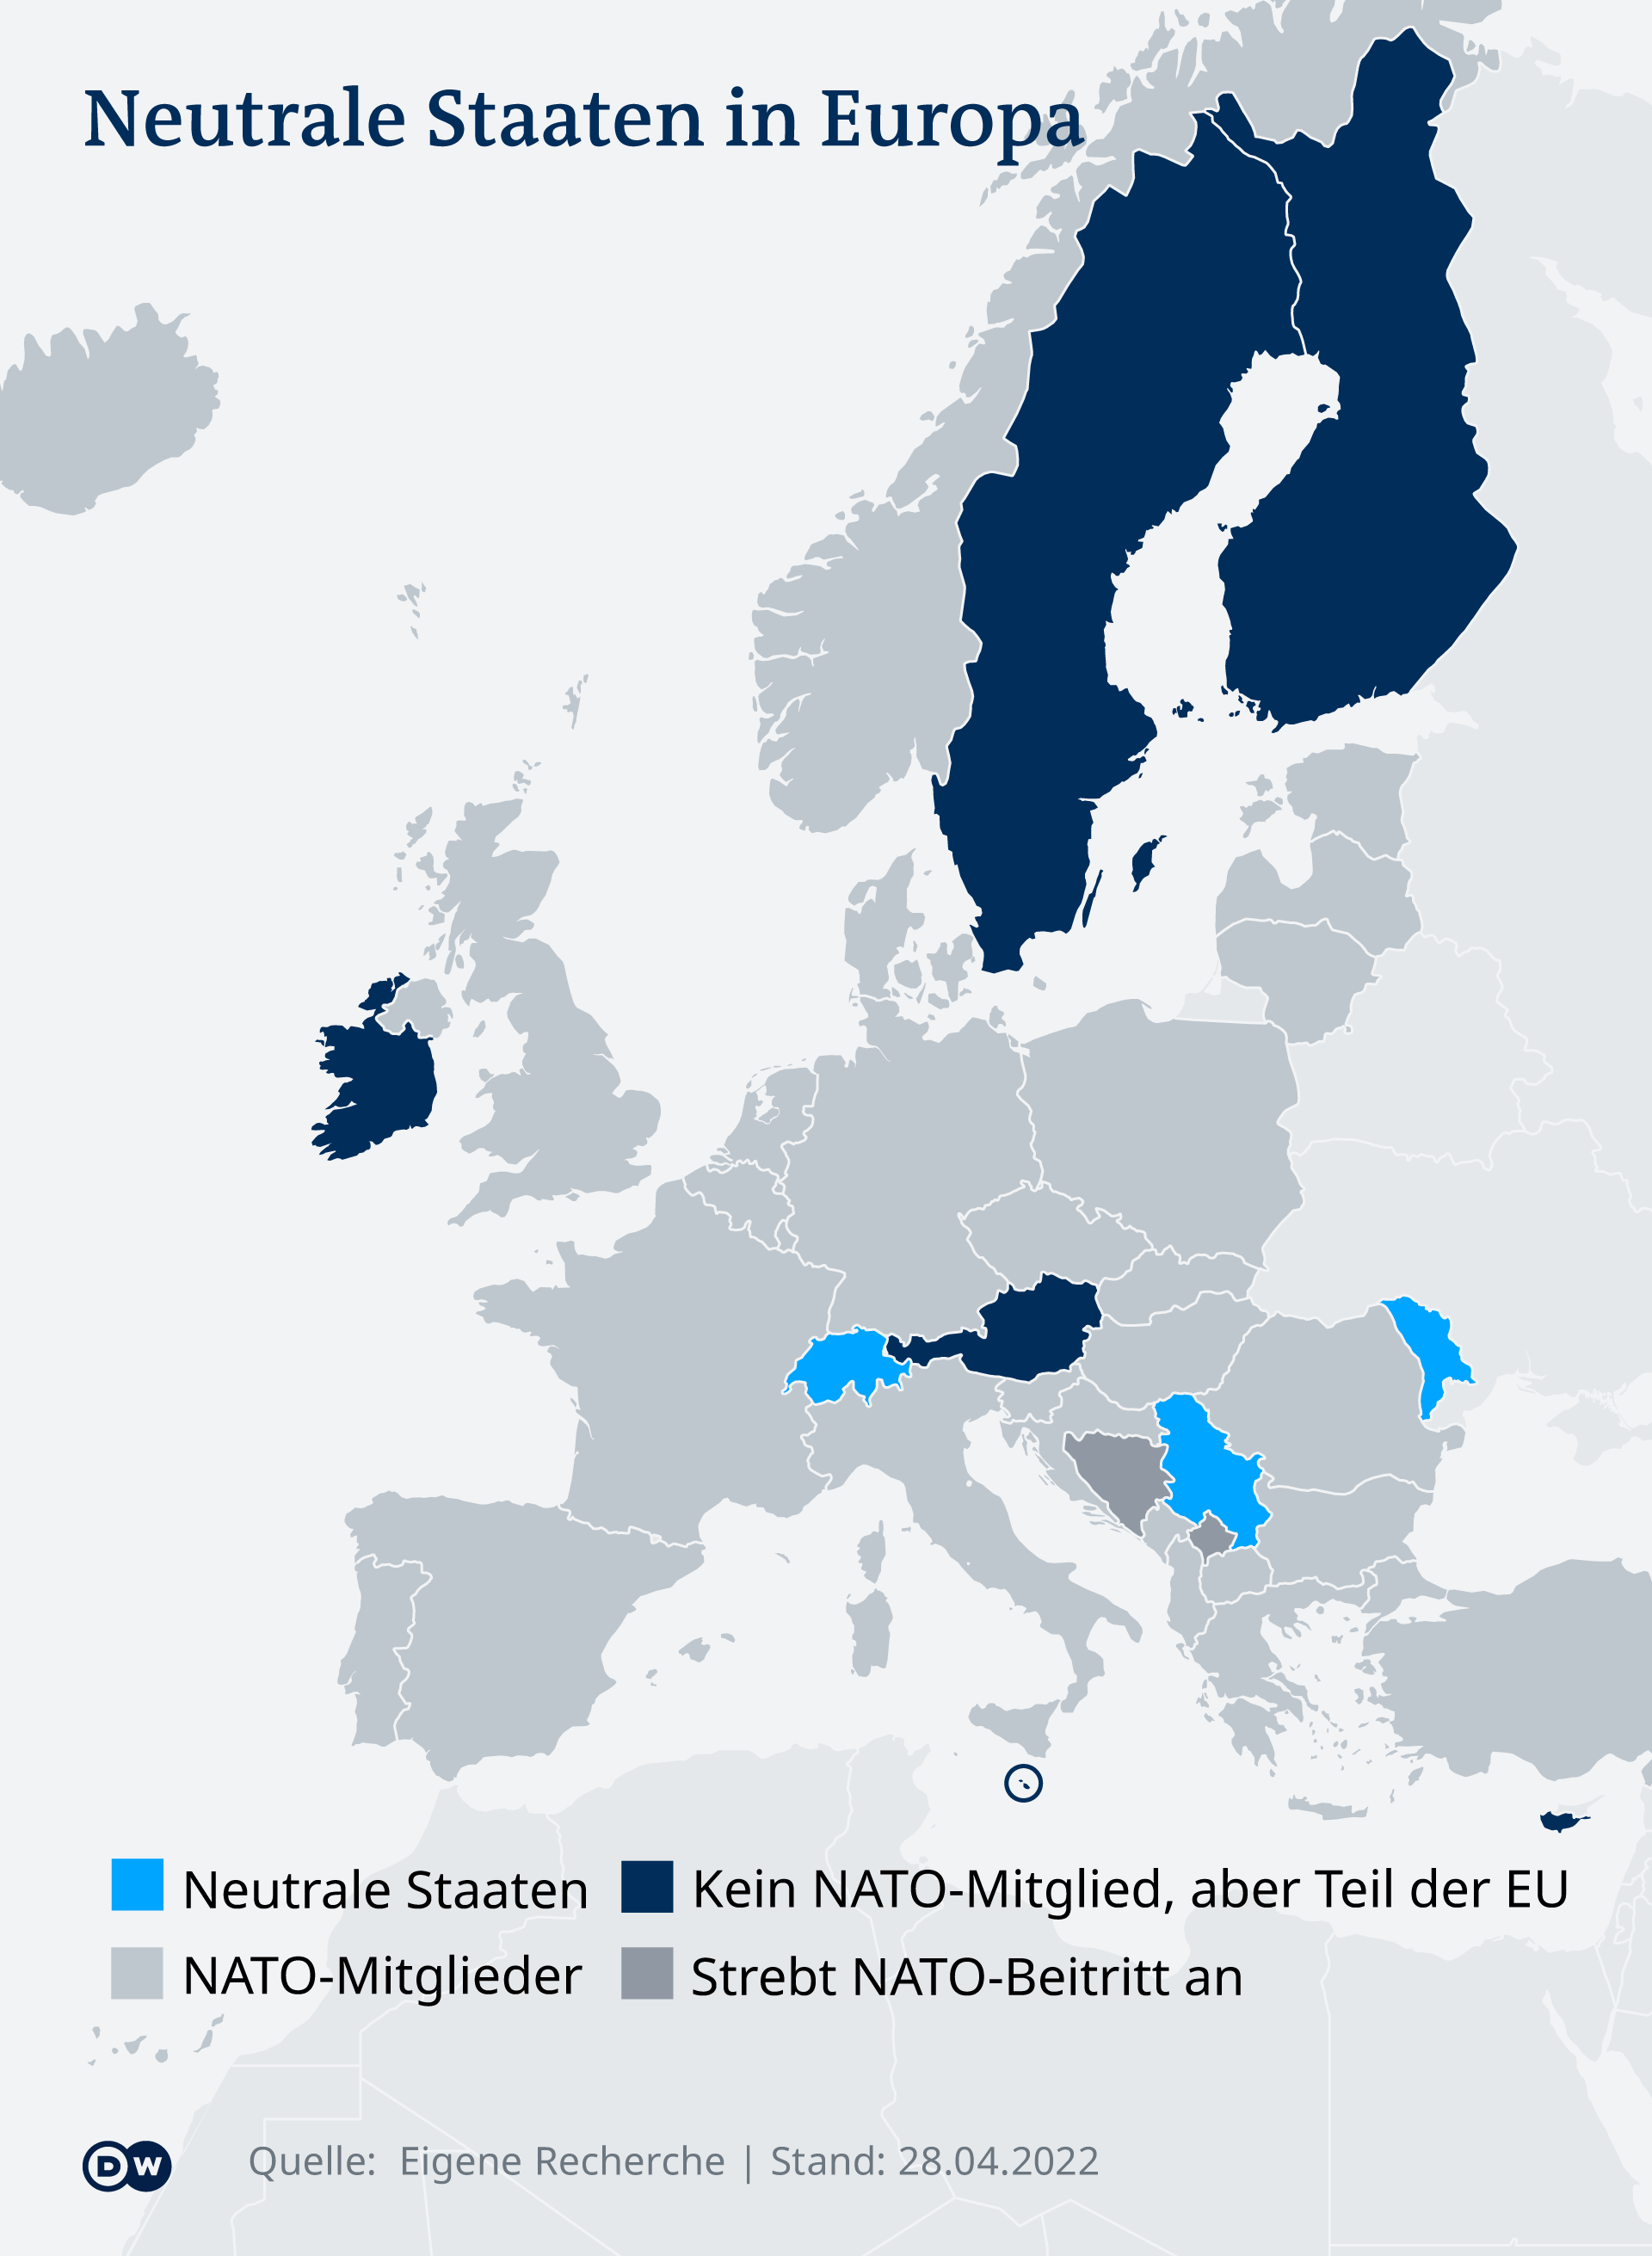 Neutralne države u Europi